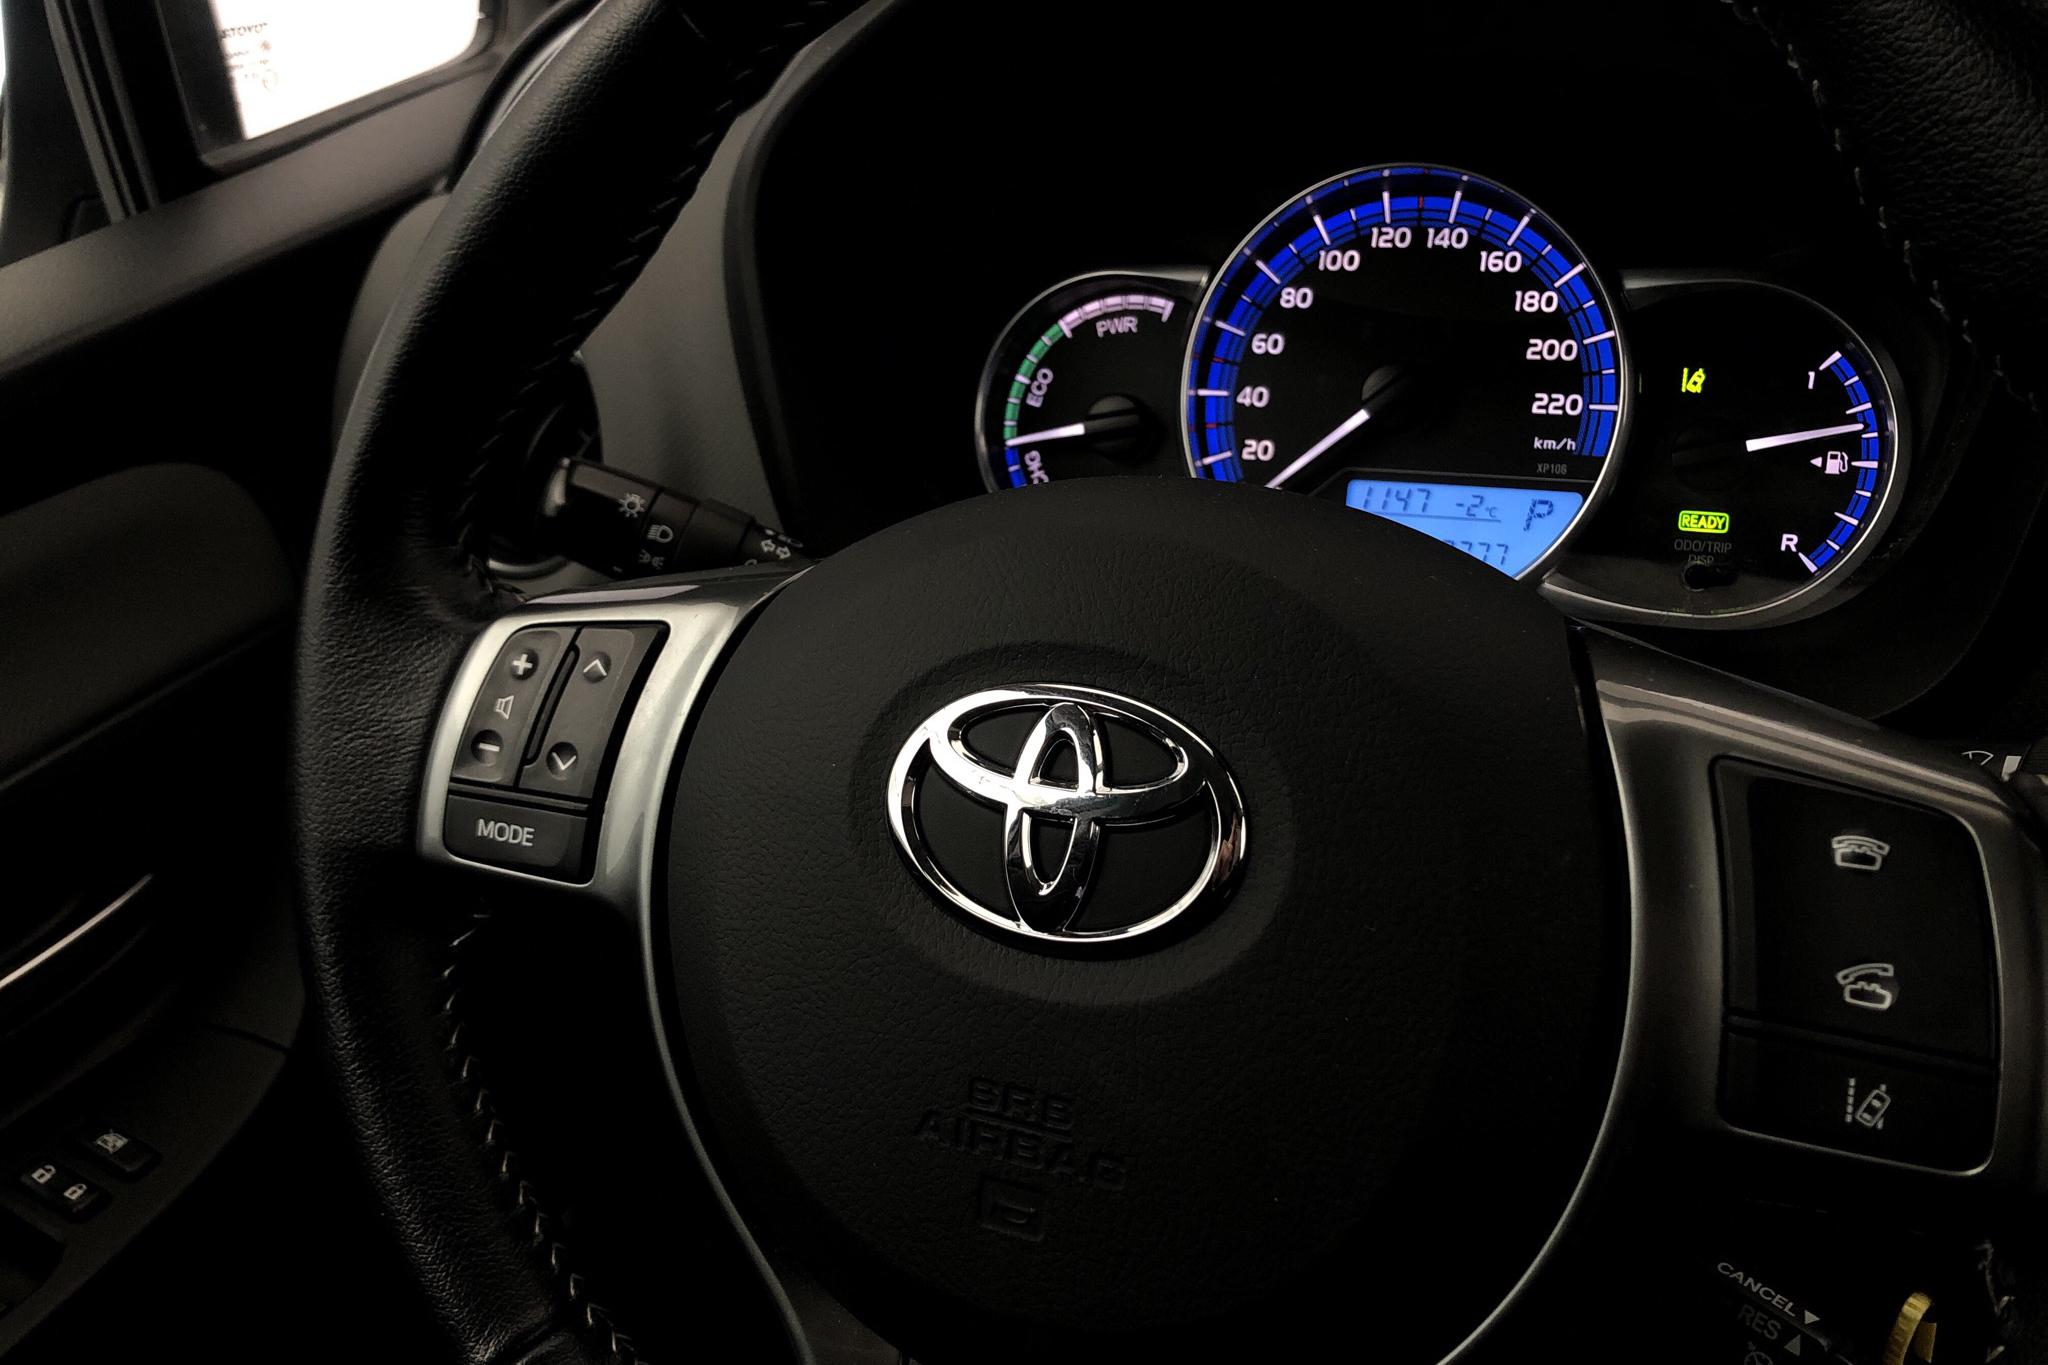 Toyota Yaris 1.5 HSD 5dr (75hk) - 39 780 km - Automatic - silver - 2015